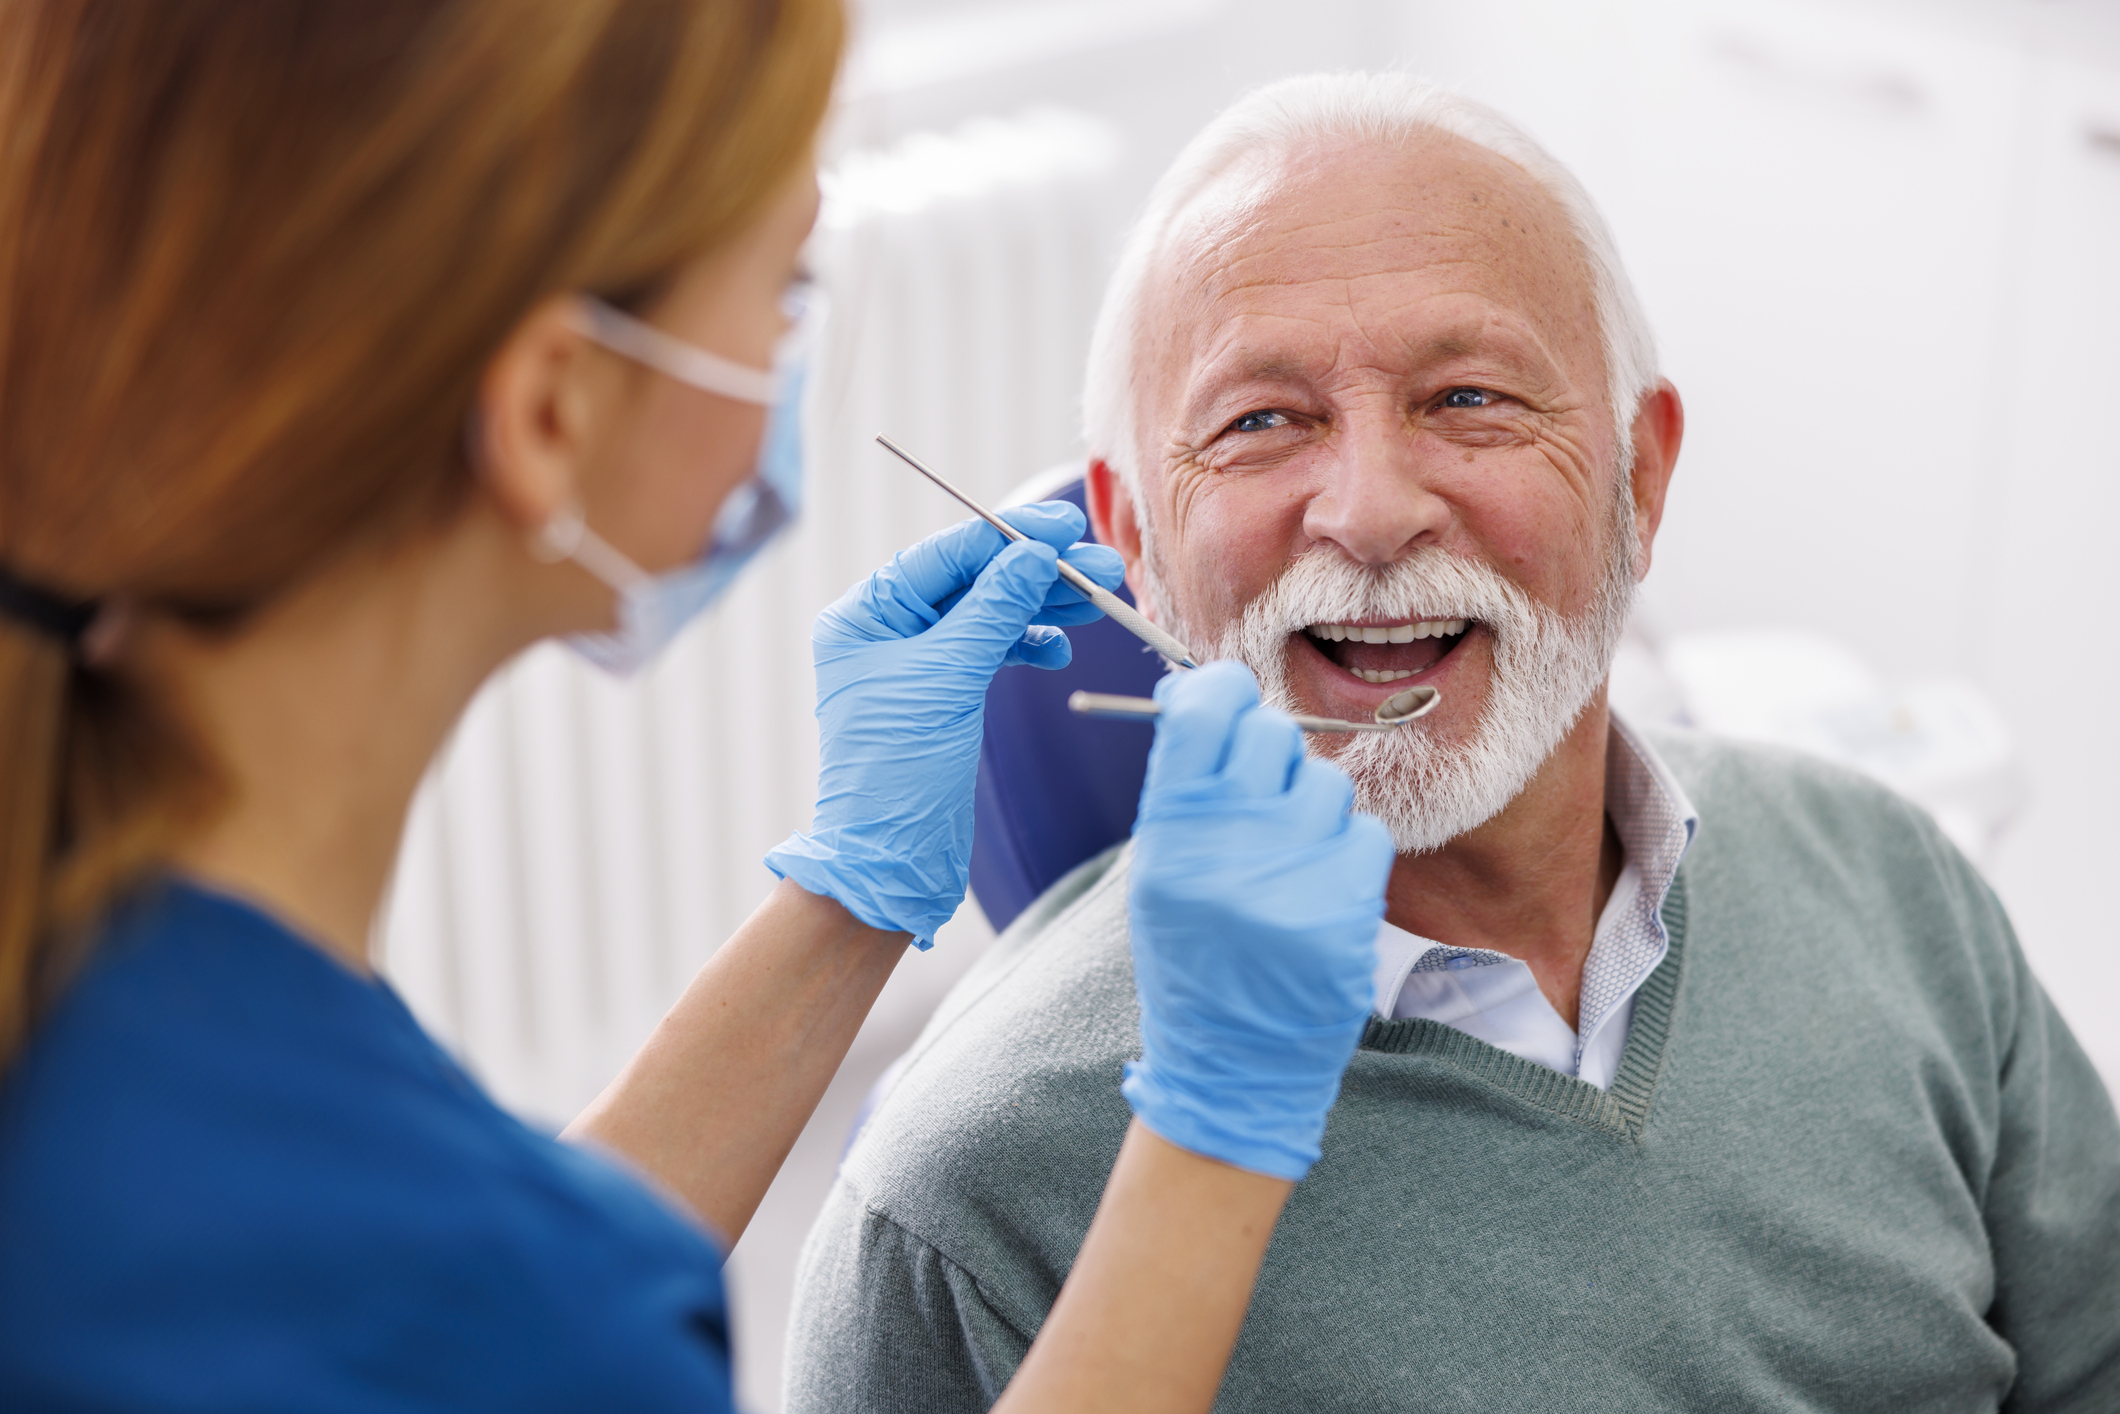 Common Dental Problems in Seniors